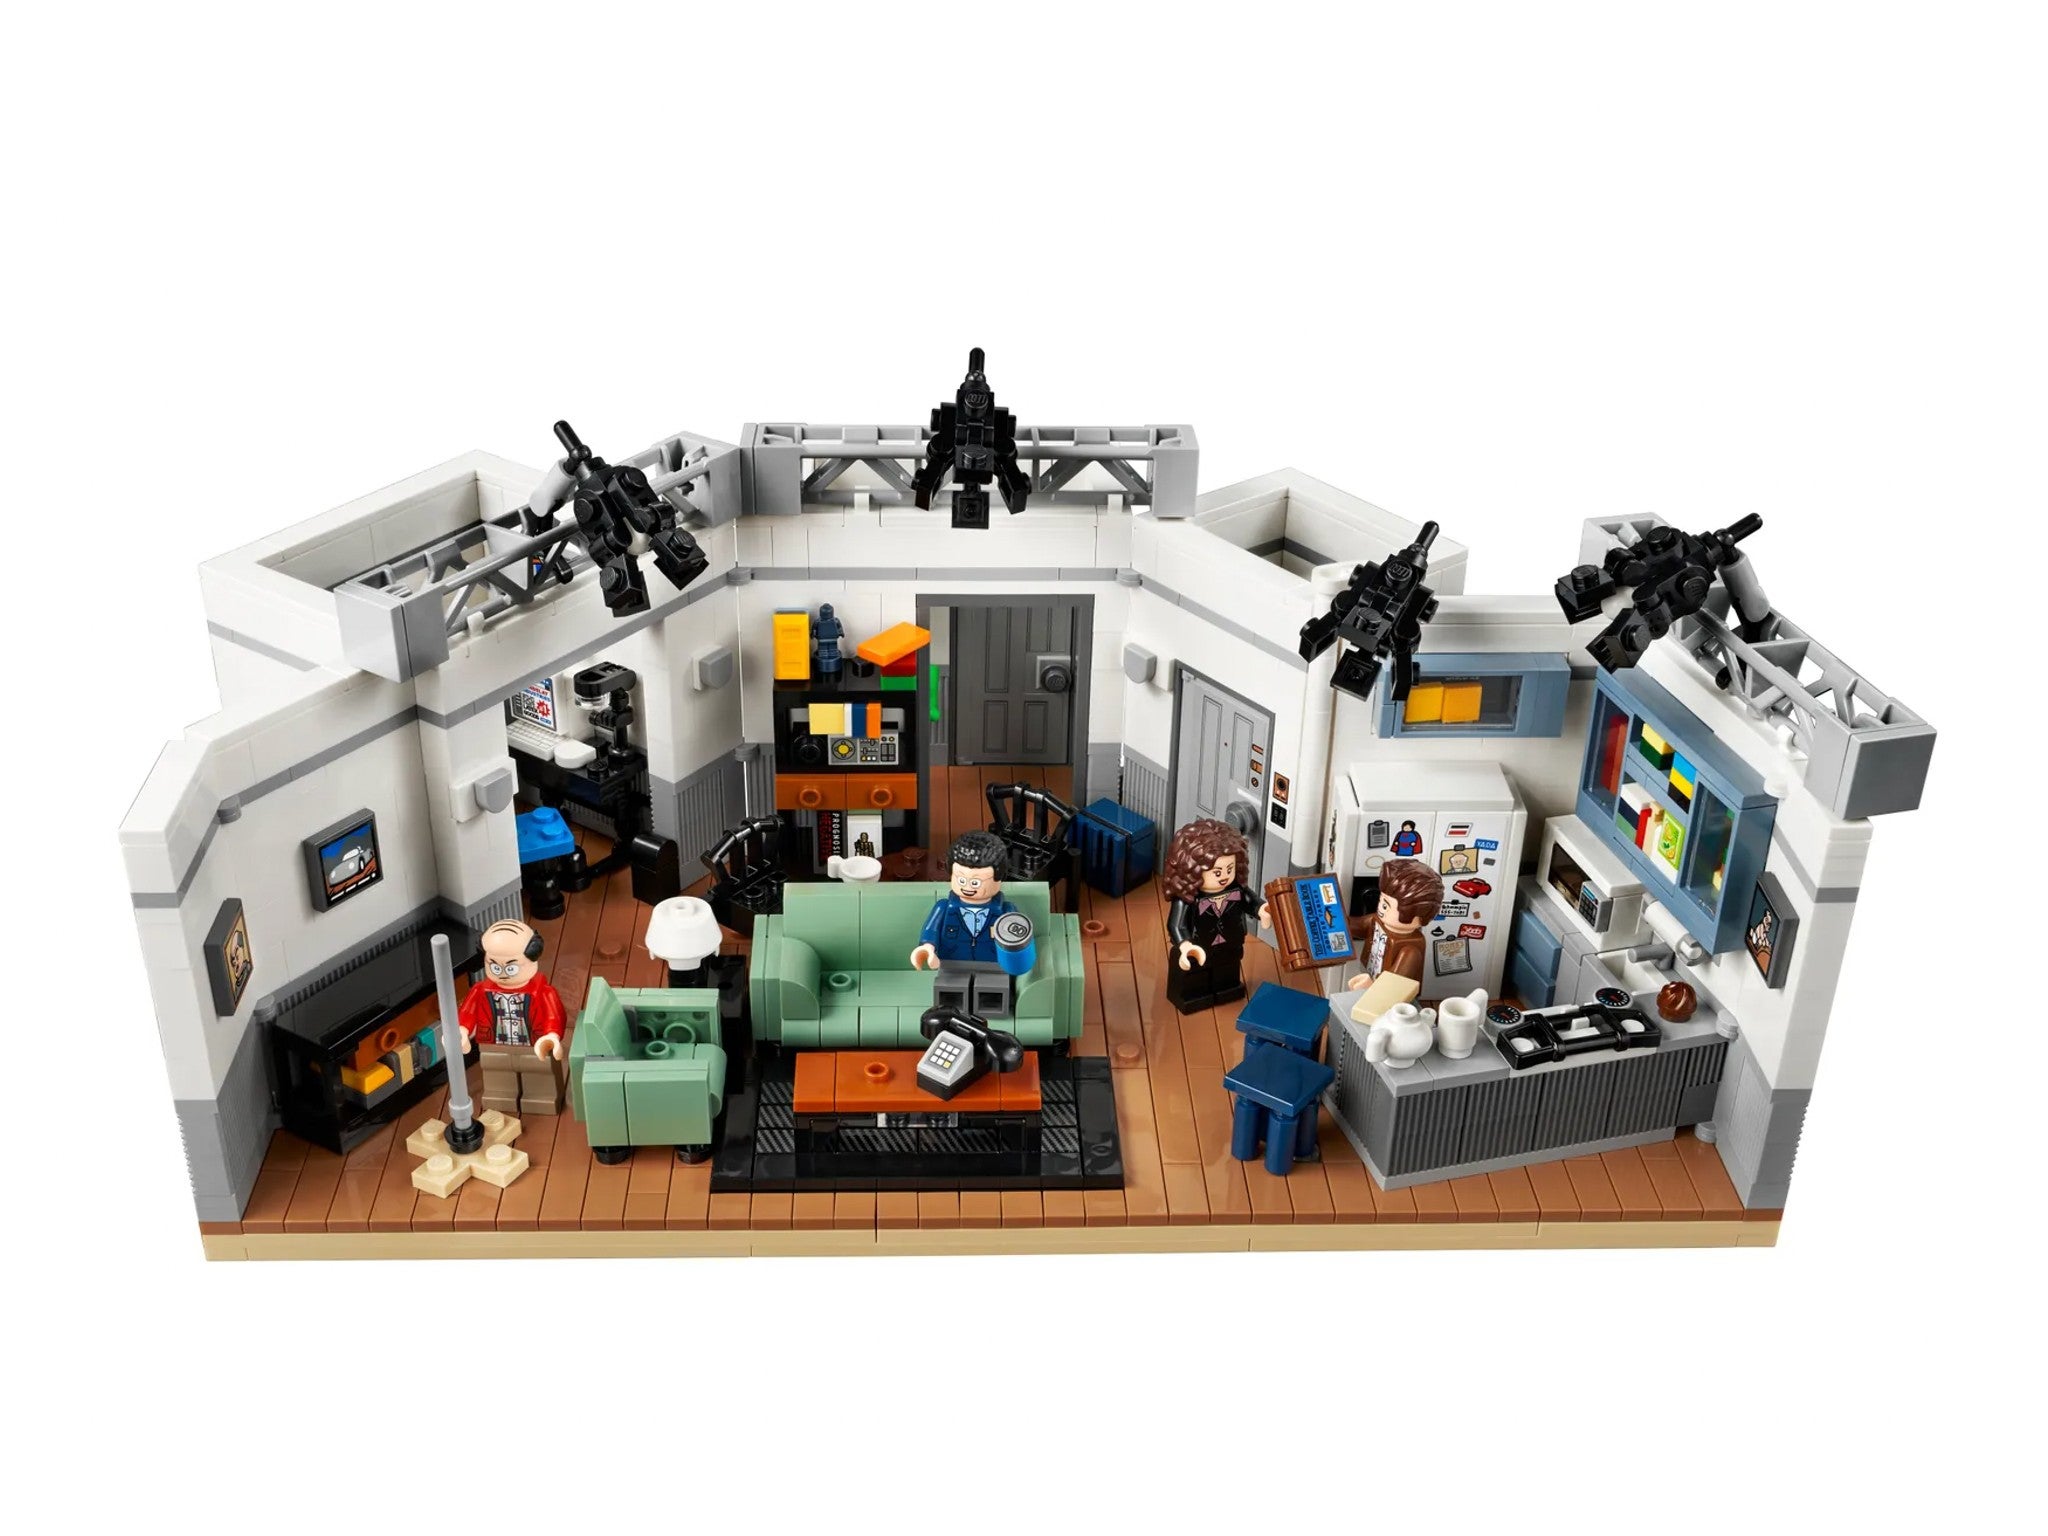 Lego ideas Seinfeld apartment building indybest.jpg